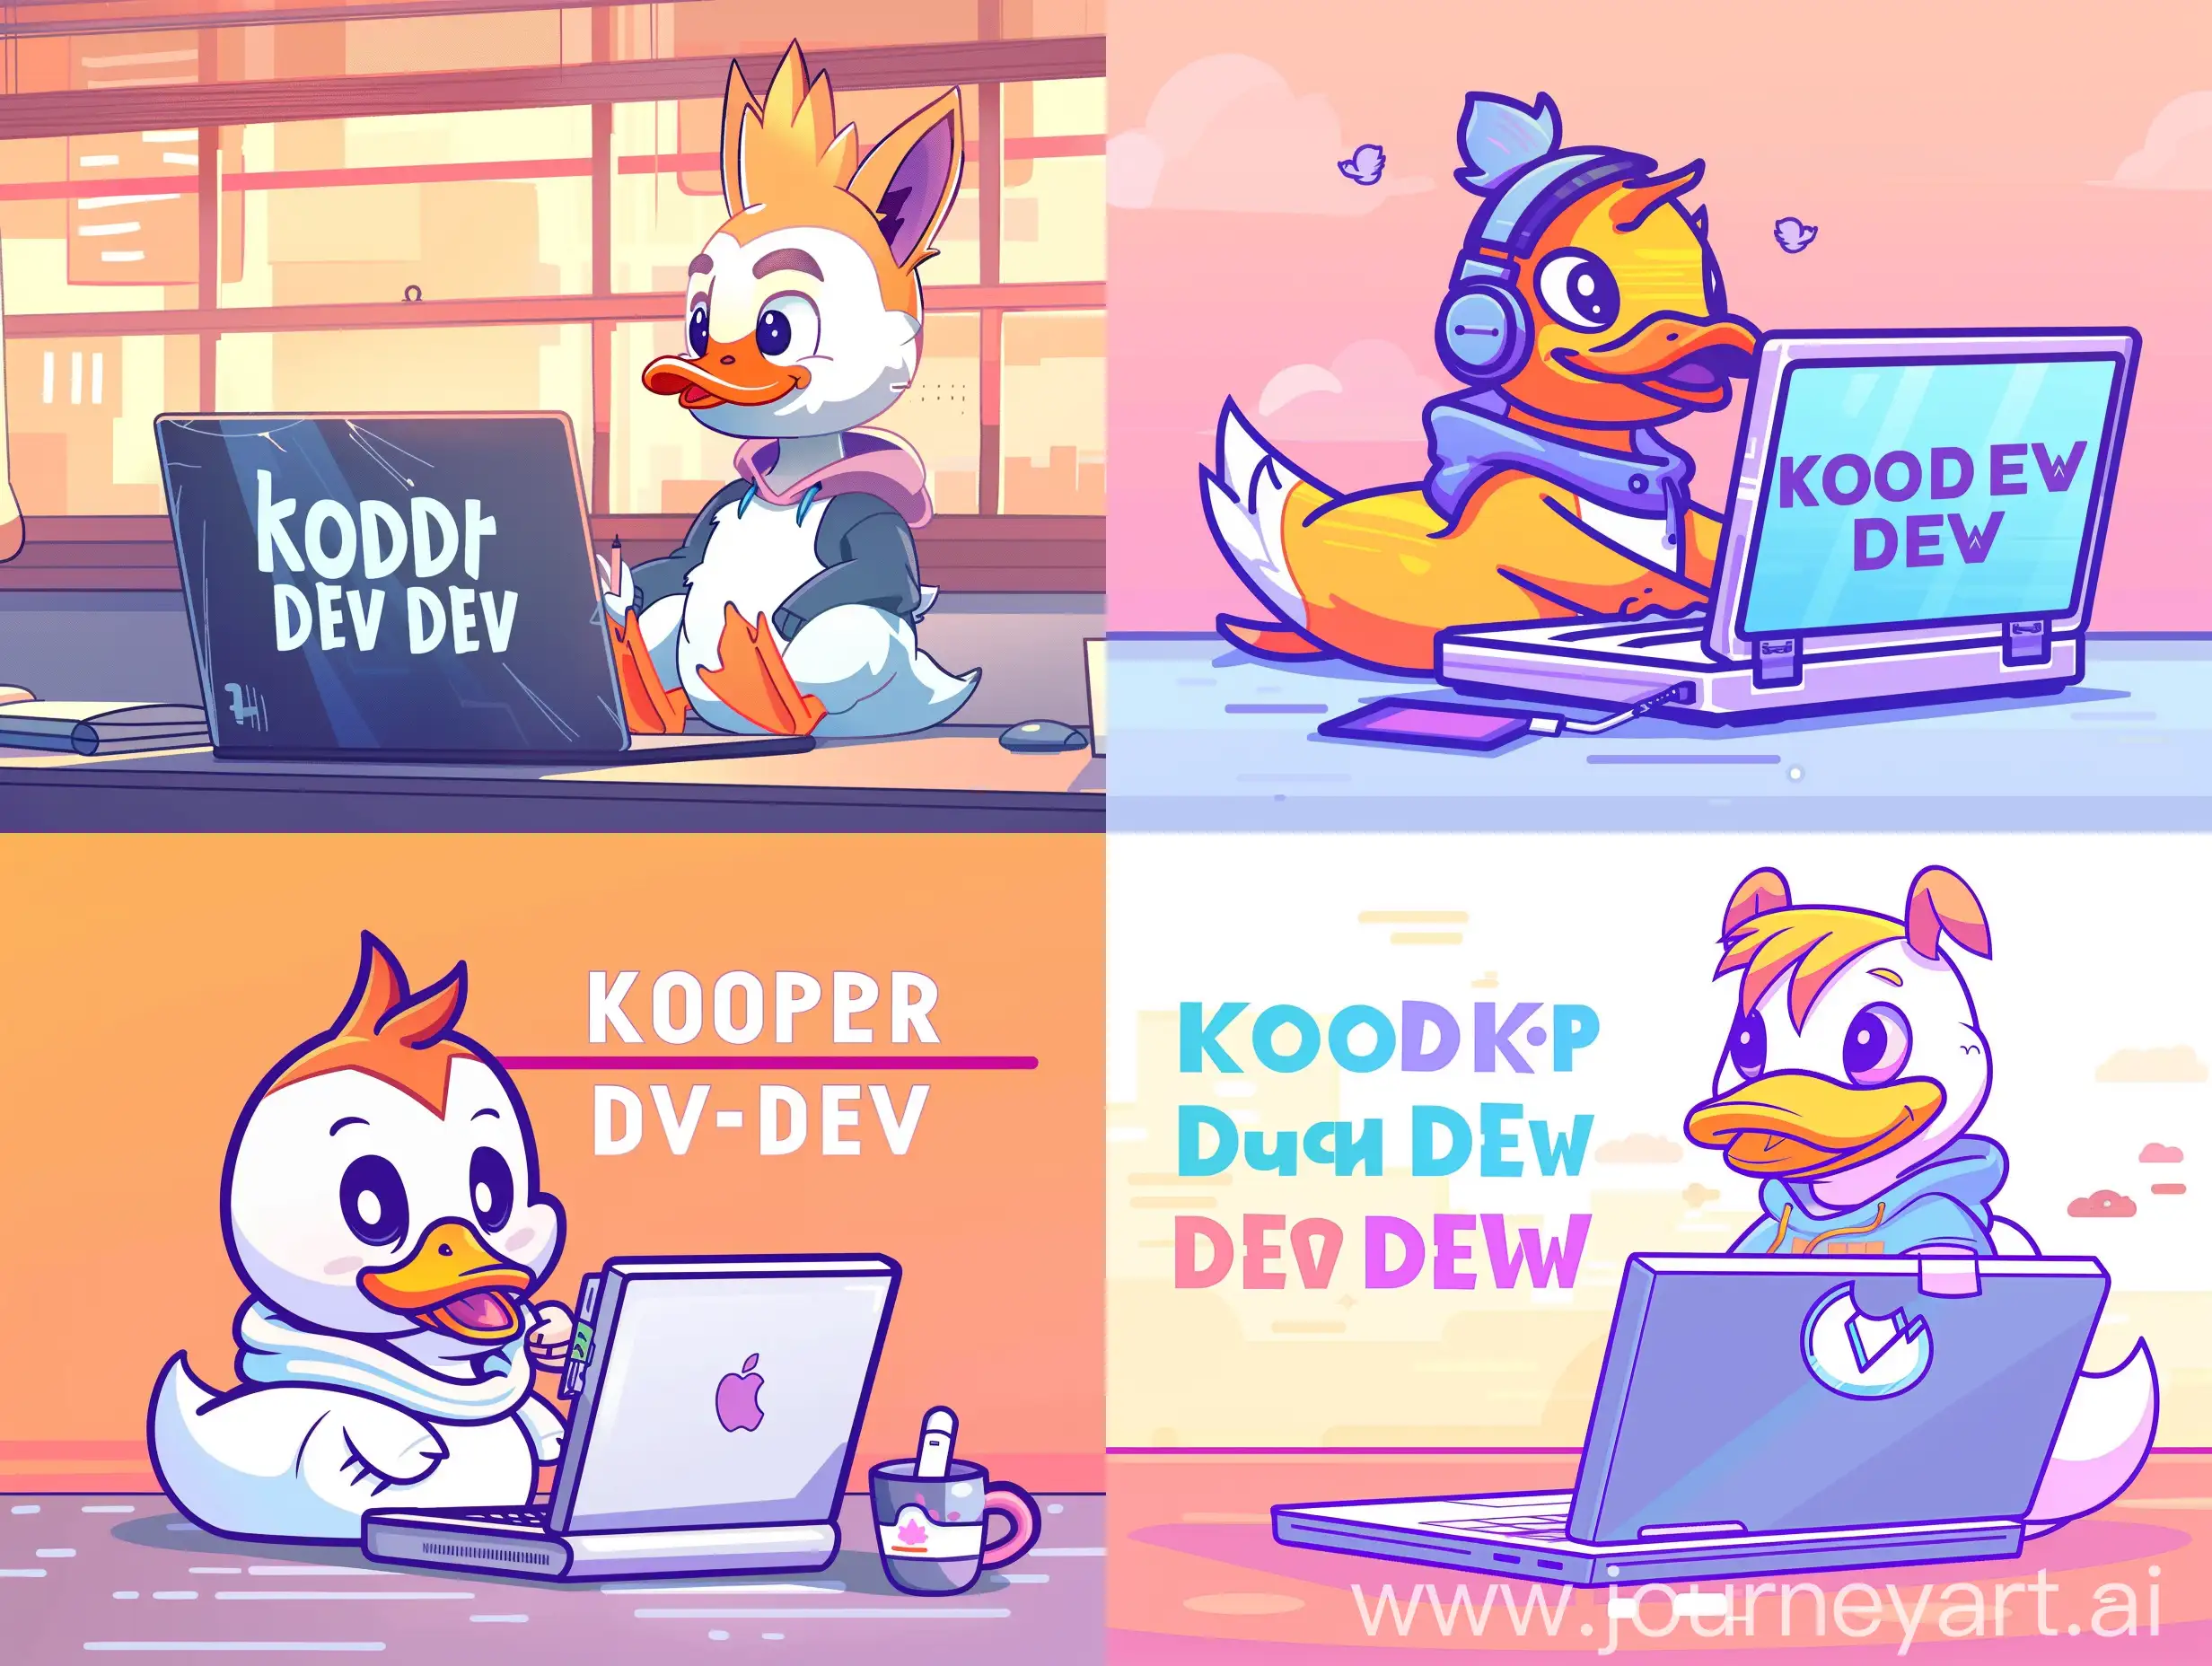 Adorable-Duck-Hacker-Working-on-Laptop-Coder-Duck-Dev